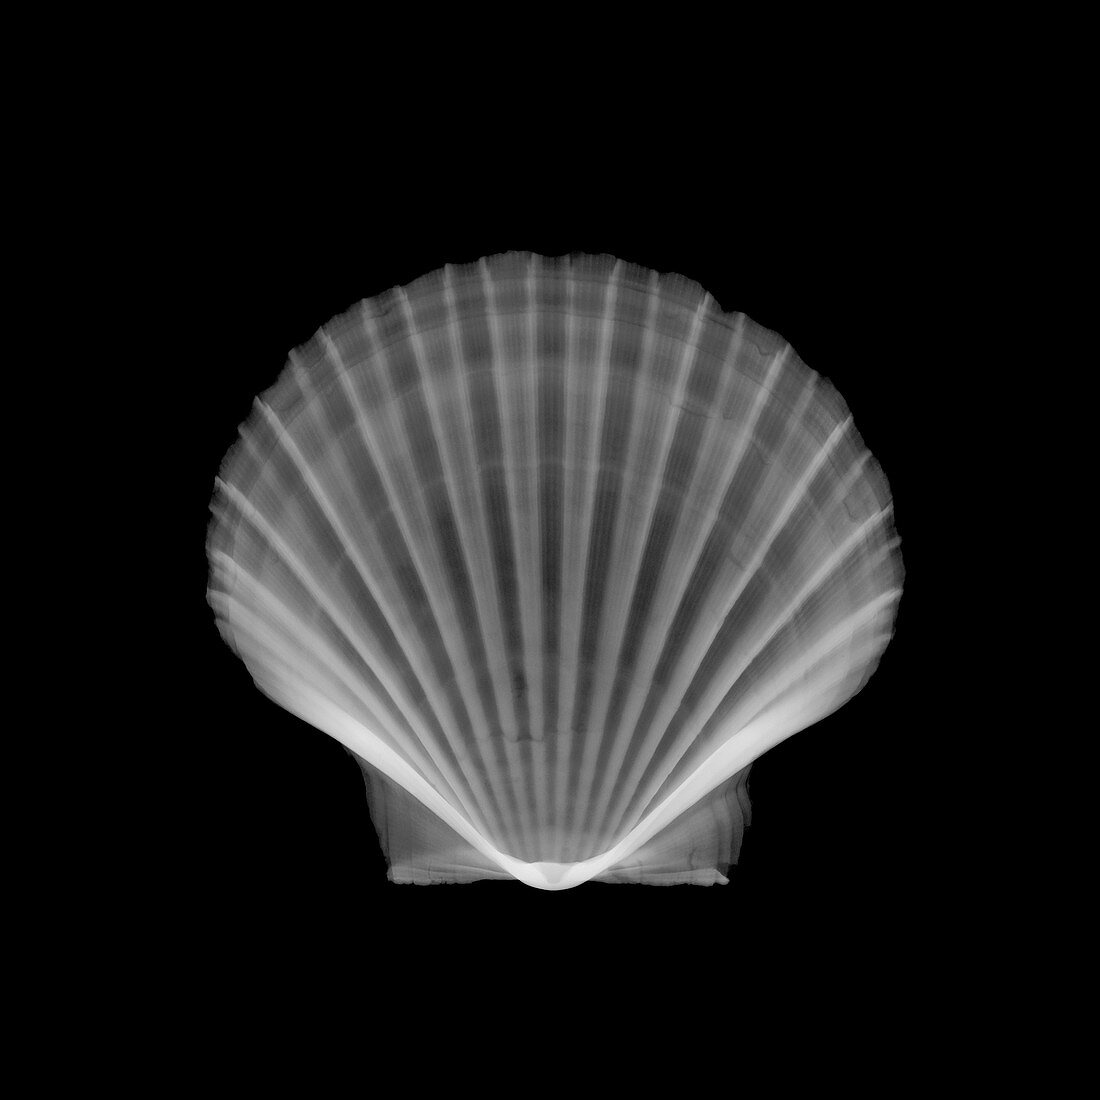 Scallop shell, X-ray